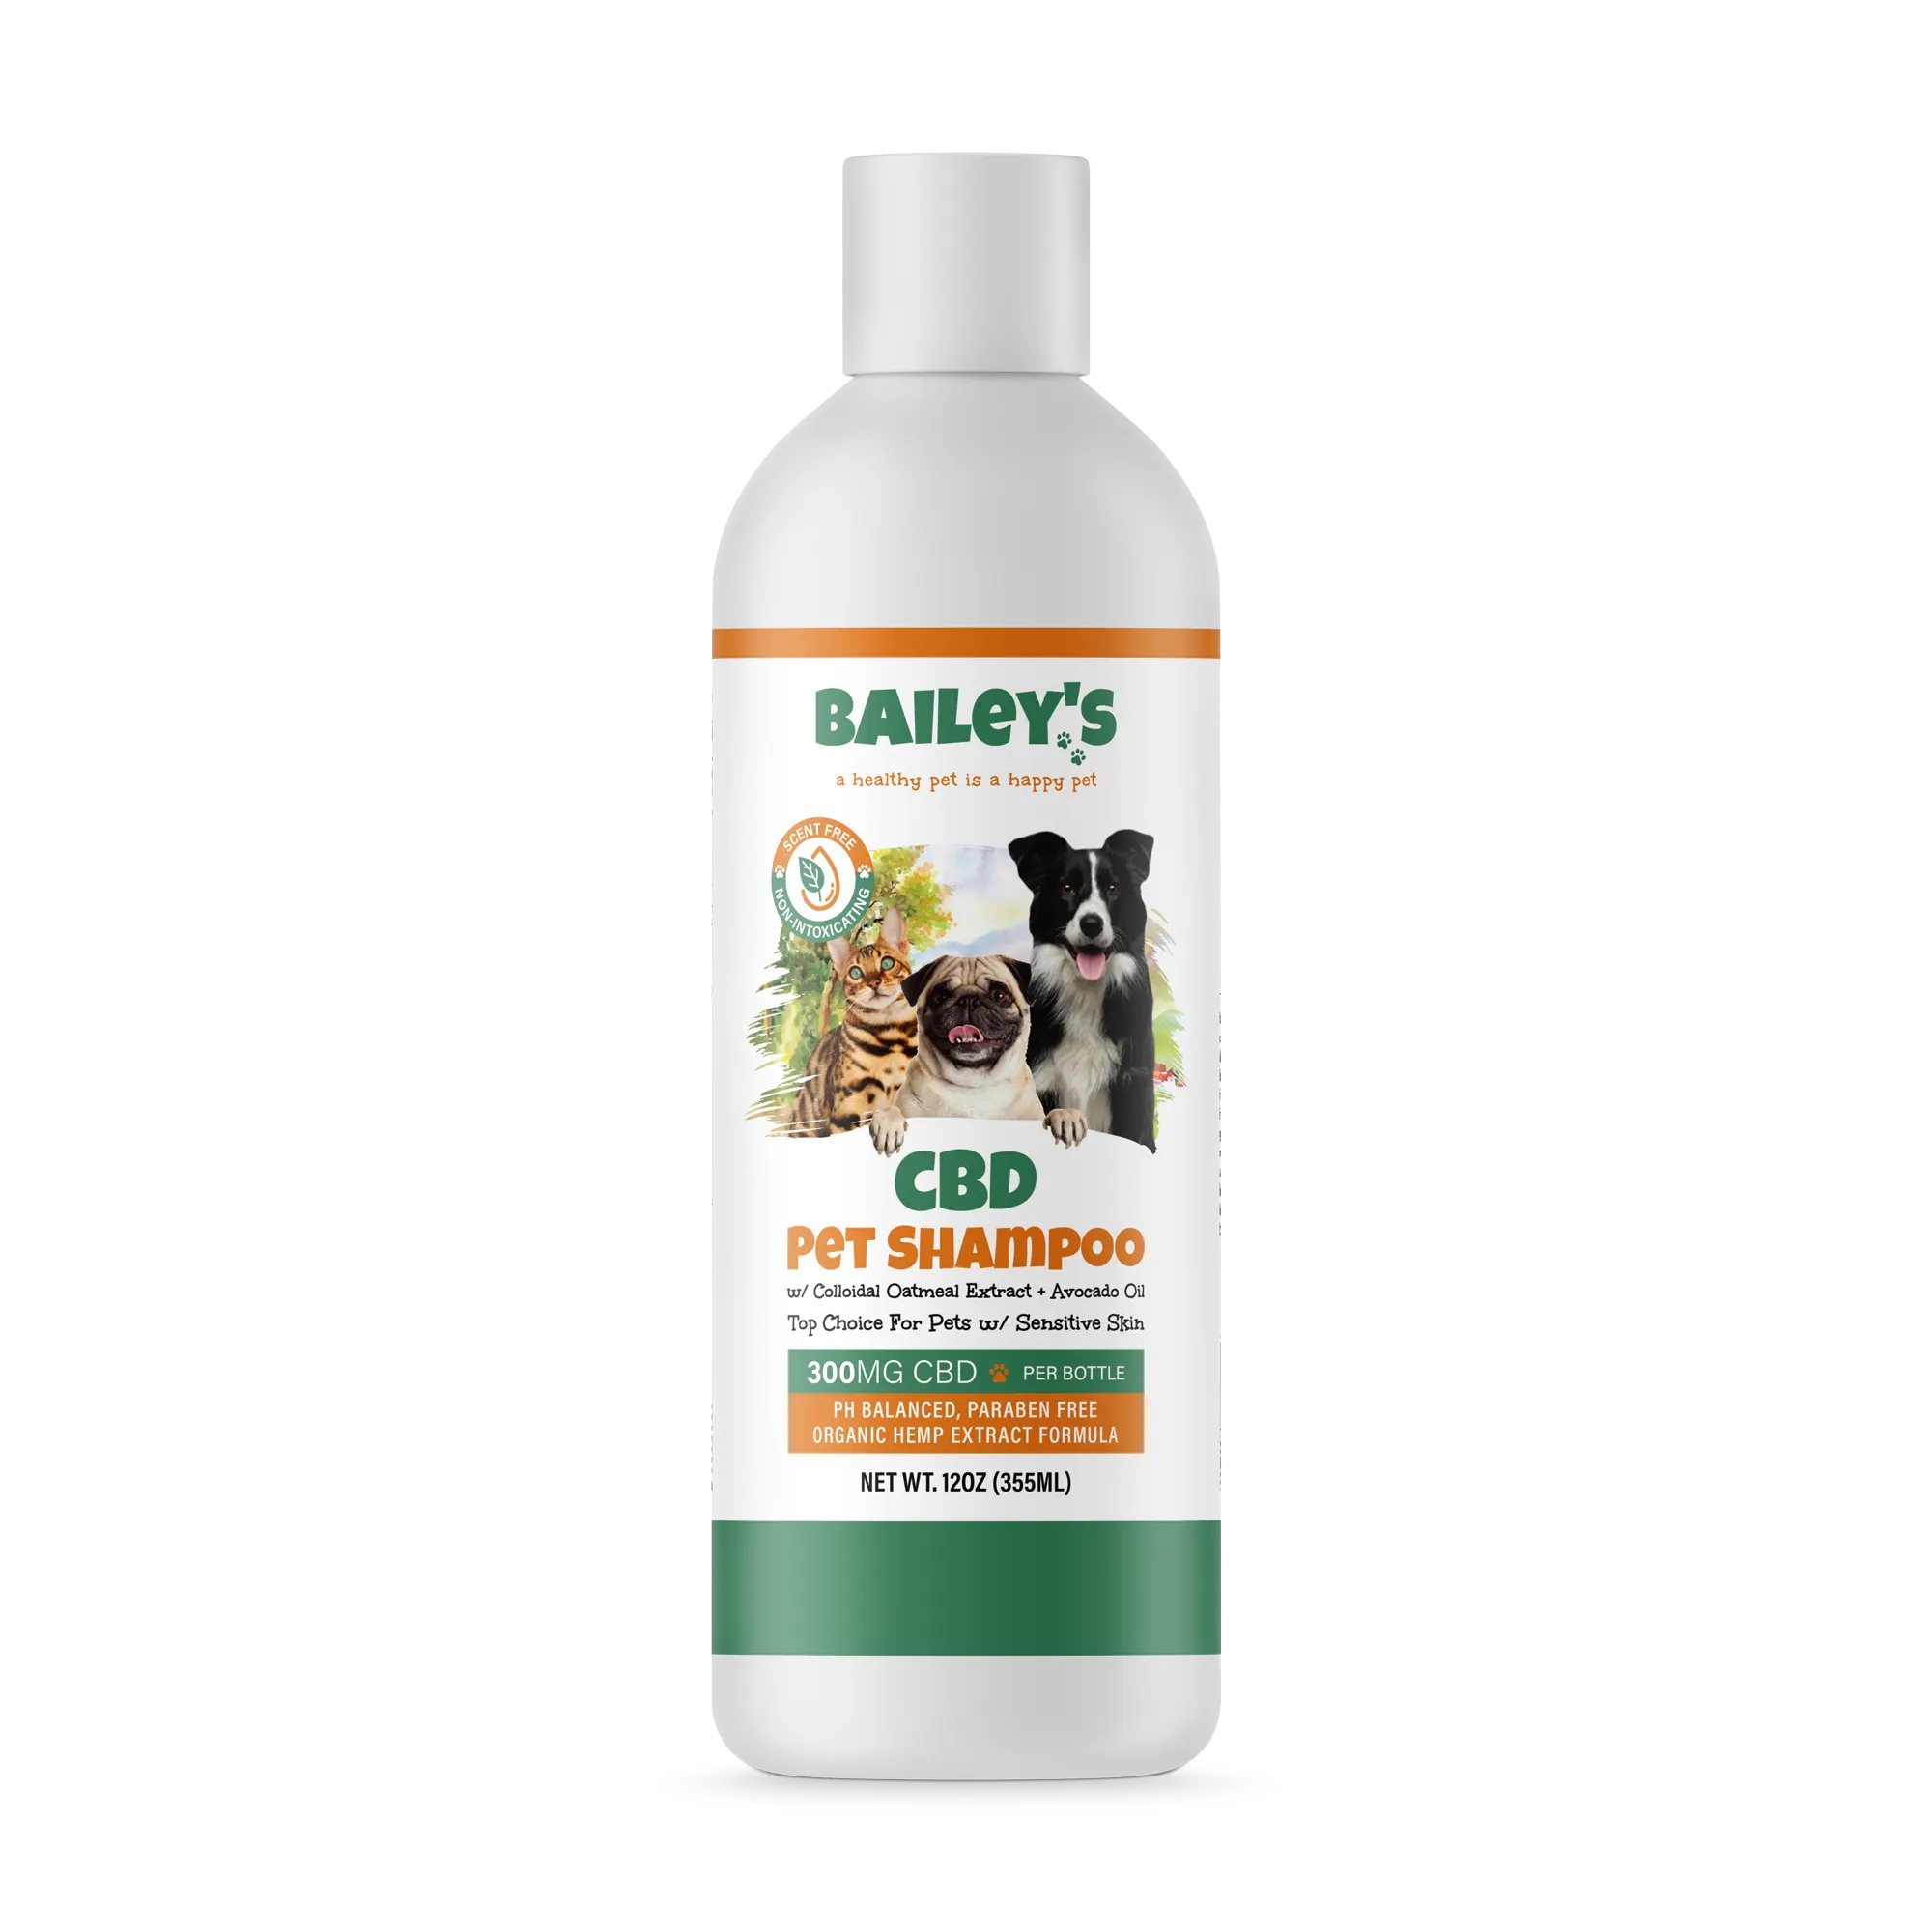 Baileys CBD Pet Shampoo